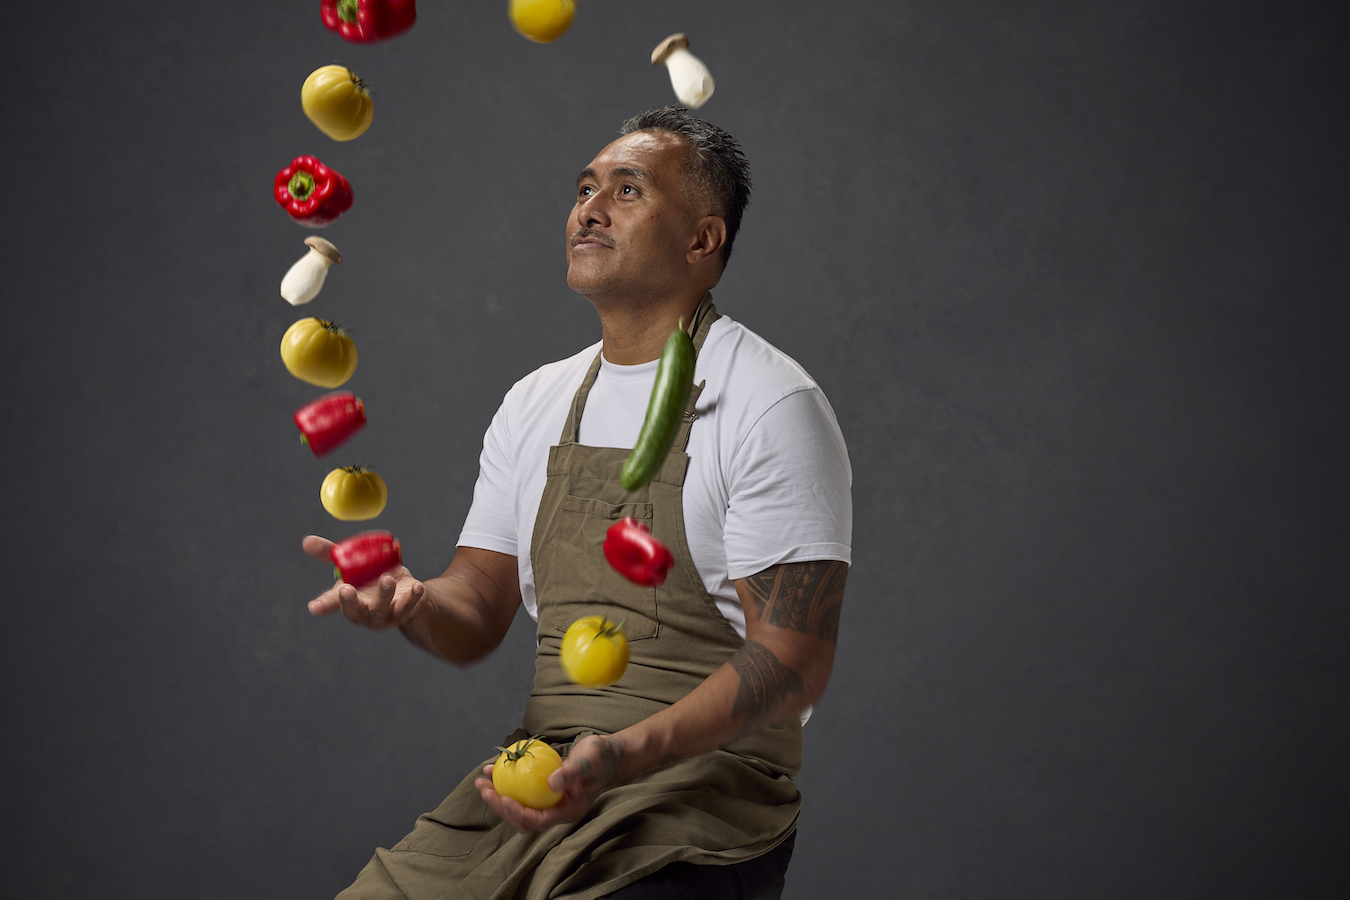 Tony juggling vegetables against a dark grey backdrop